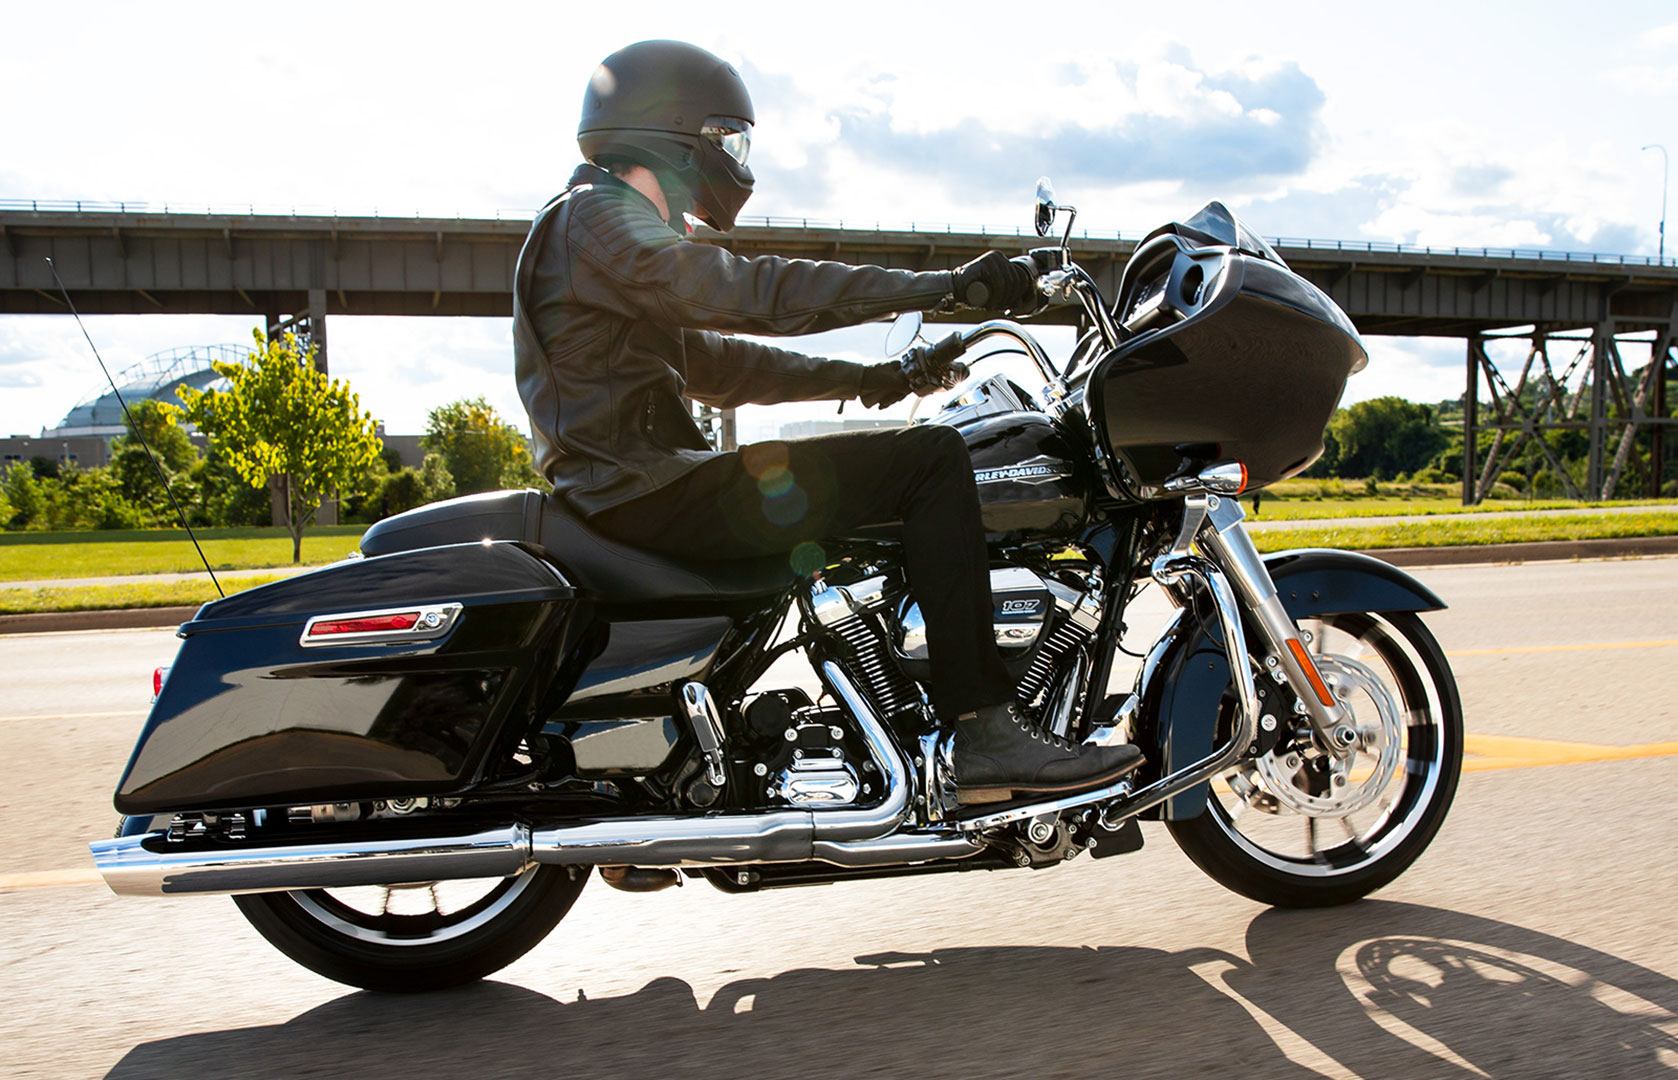 2022 Harley-Davidson Road Glide® in Grand Prairie, Texas - Photo 3